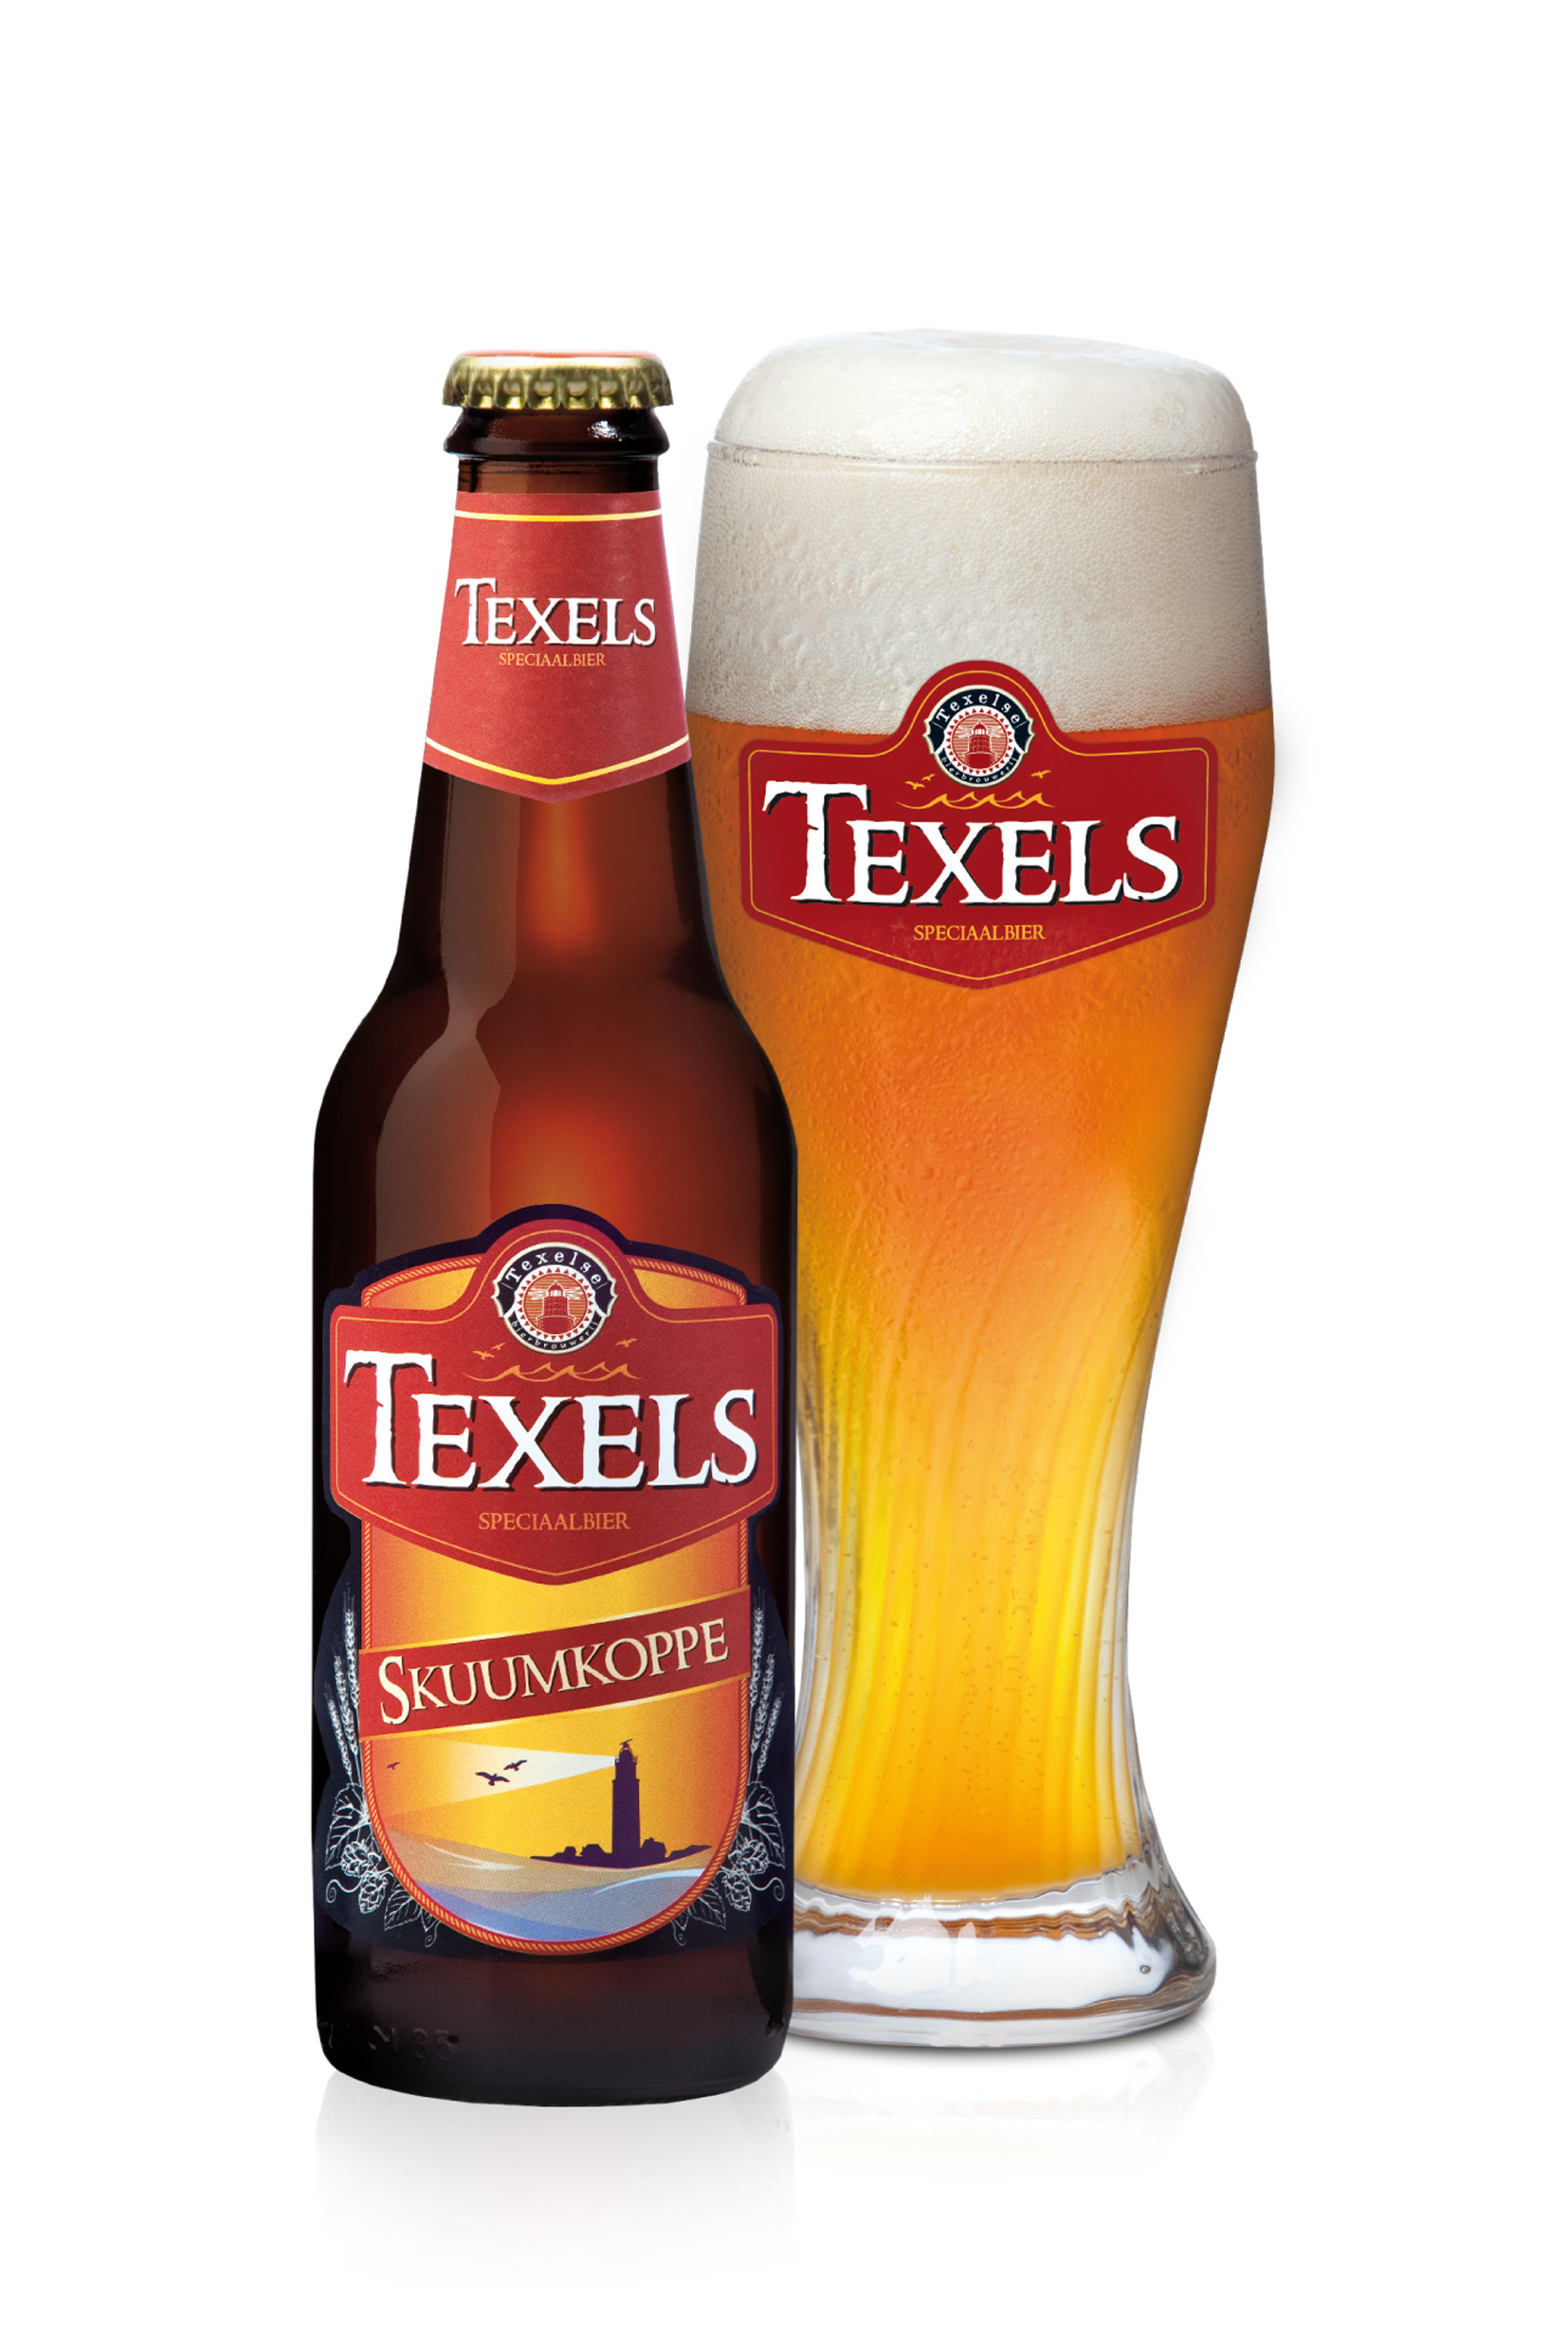 52430 Texels skuumkoppe bier fles 24x30cl